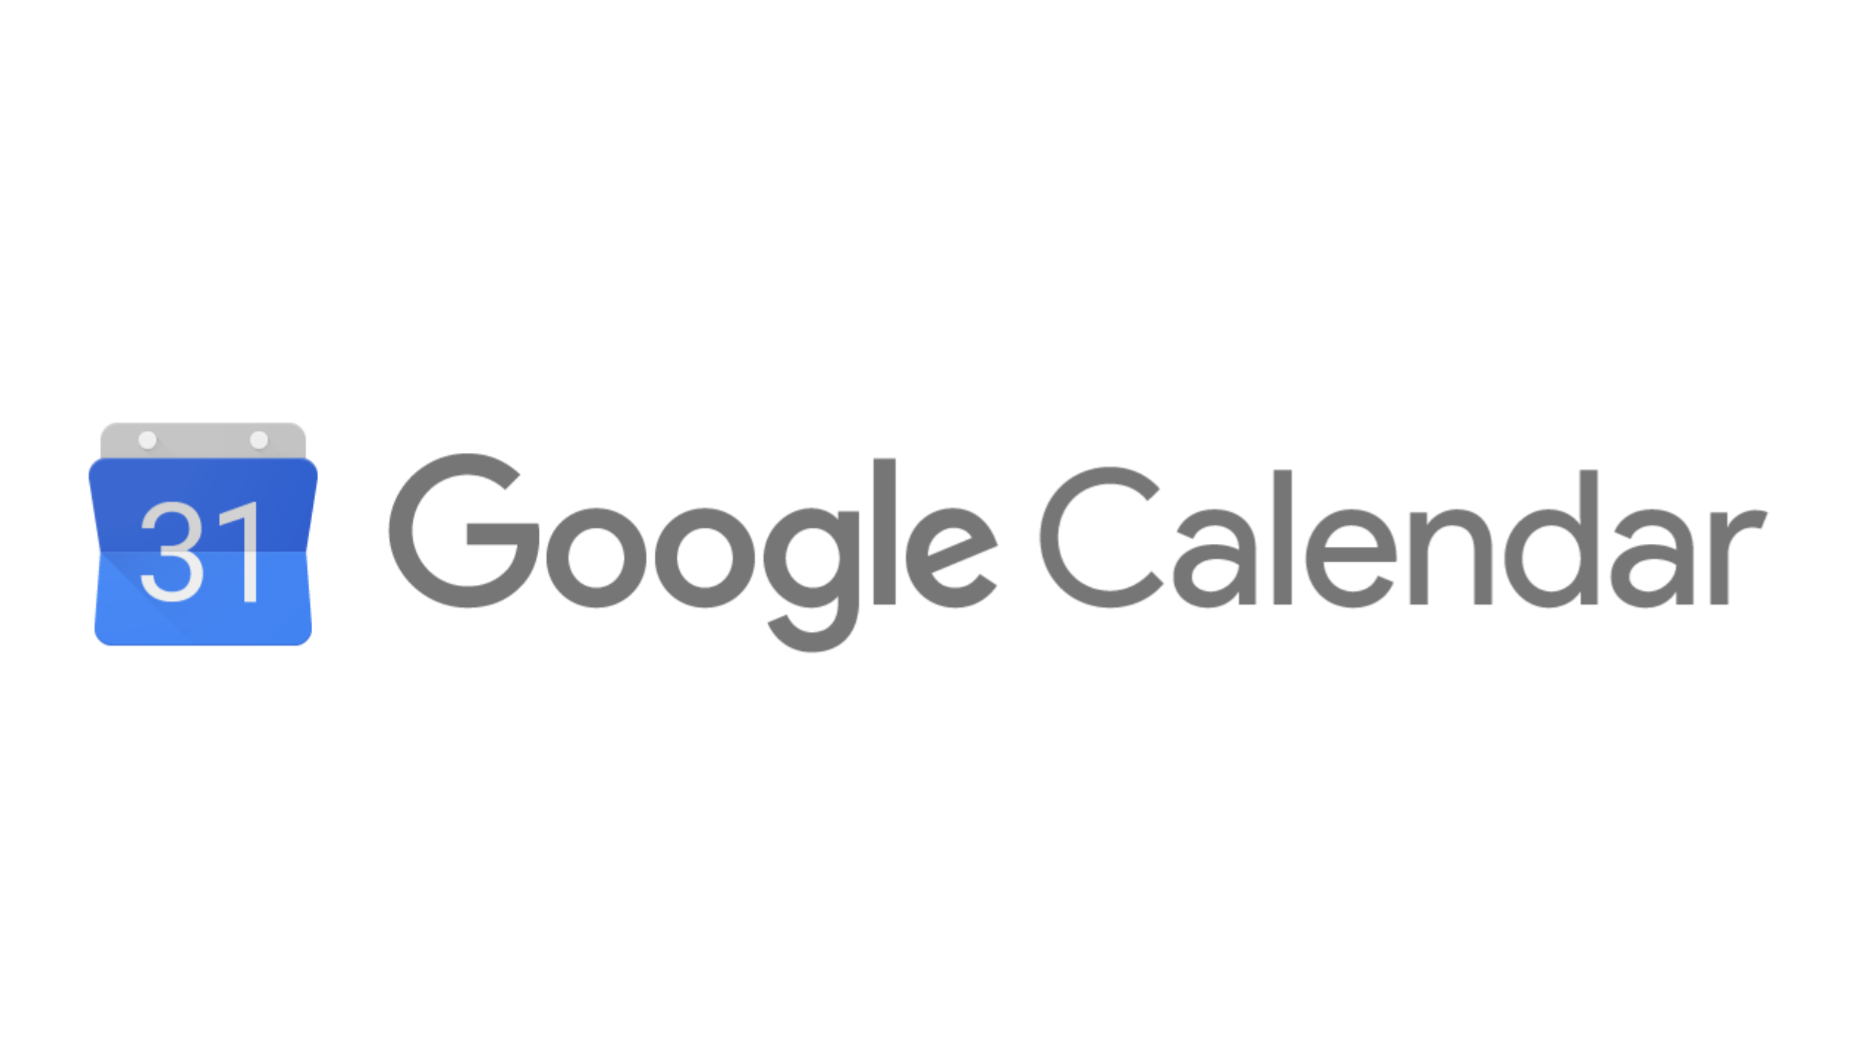 San google. Гугл календарь. Календарь goo. Гугл календарь иконка. Гугл календарь картинки.